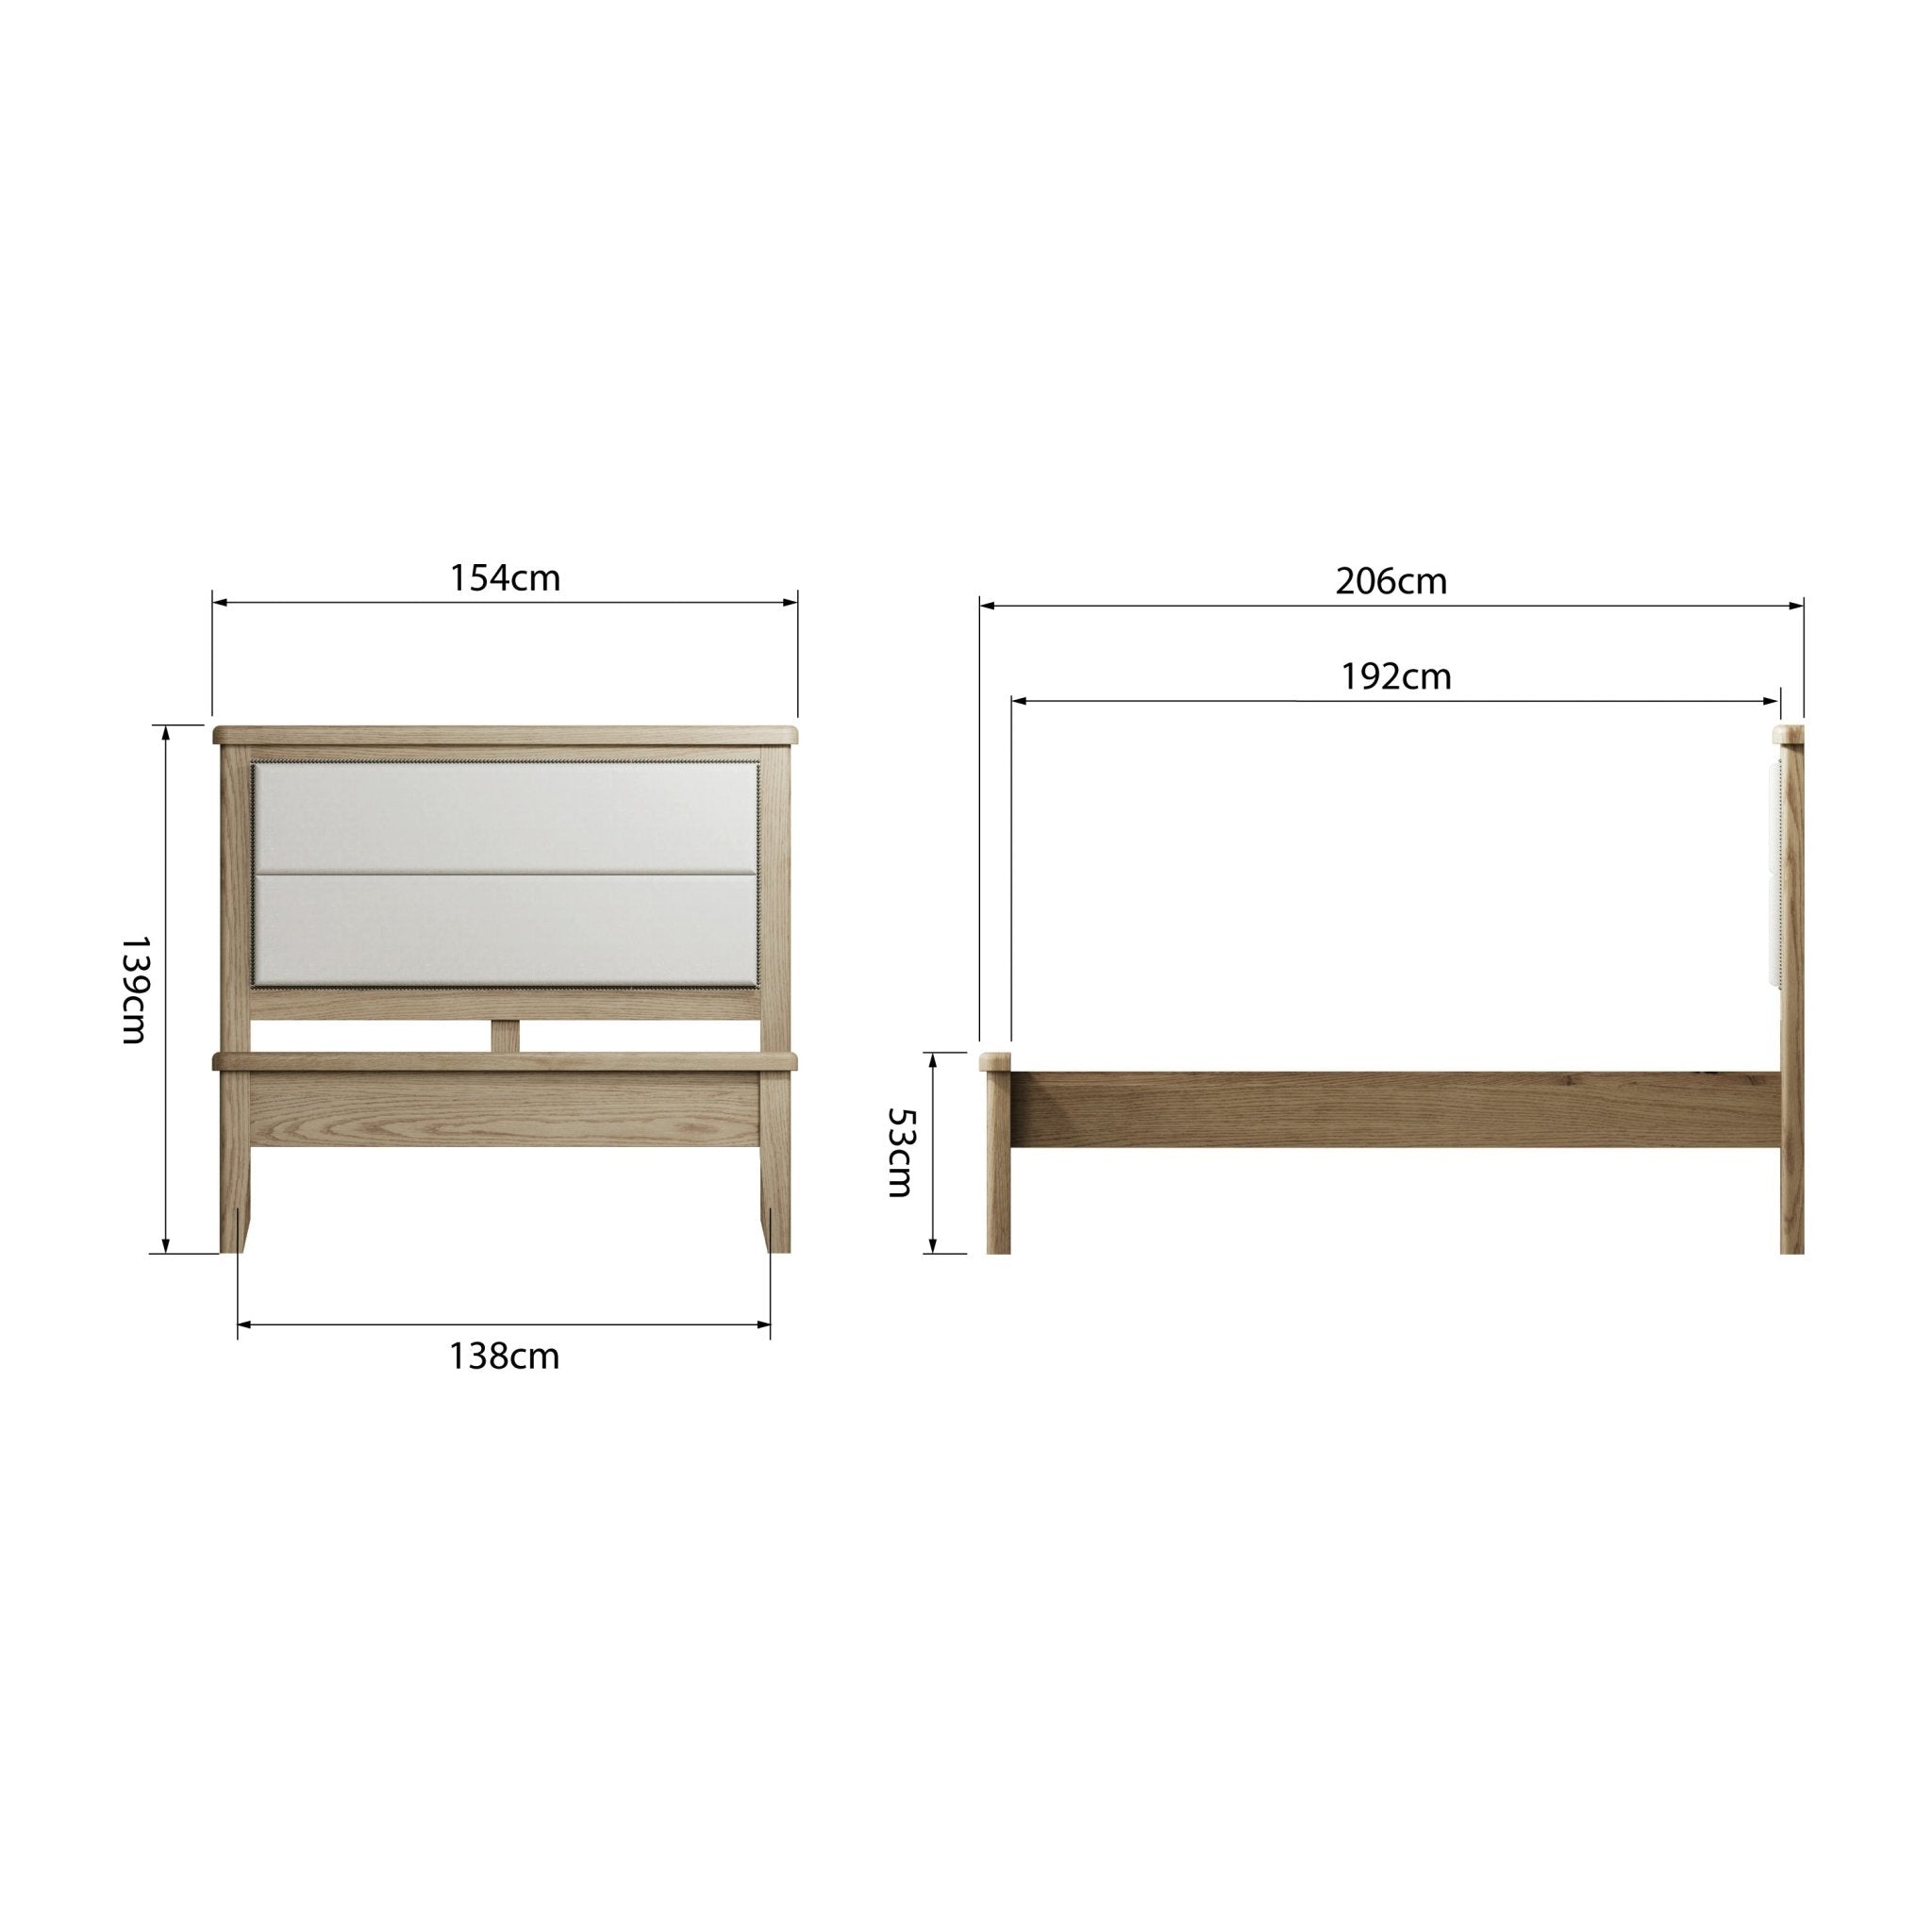 Rusper Oak 4'6" Double Bed Frame - Fabric Headboard - Duck Barn Interiors